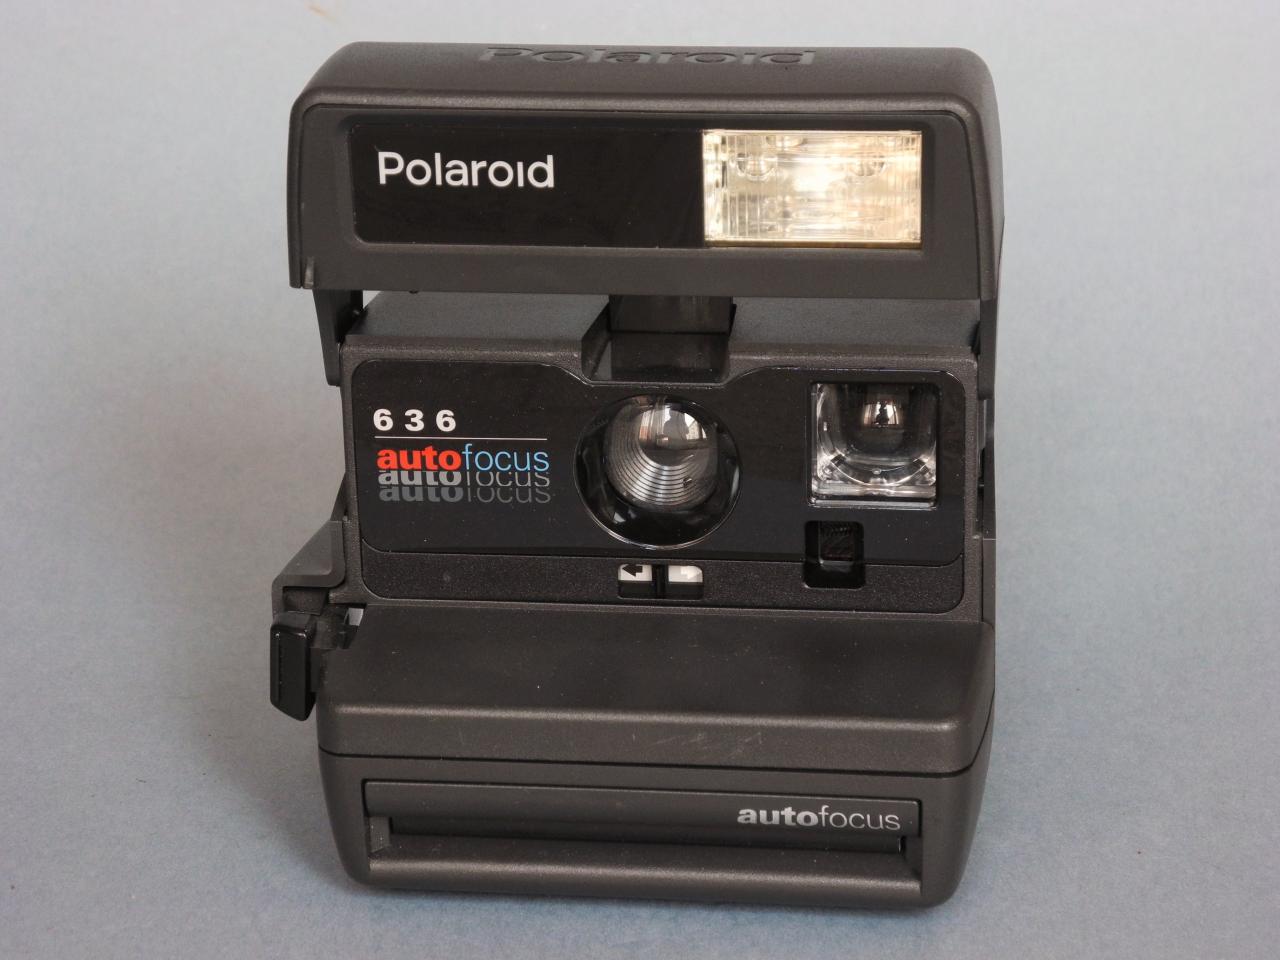 *Polaroid 636 autofocus 1995*